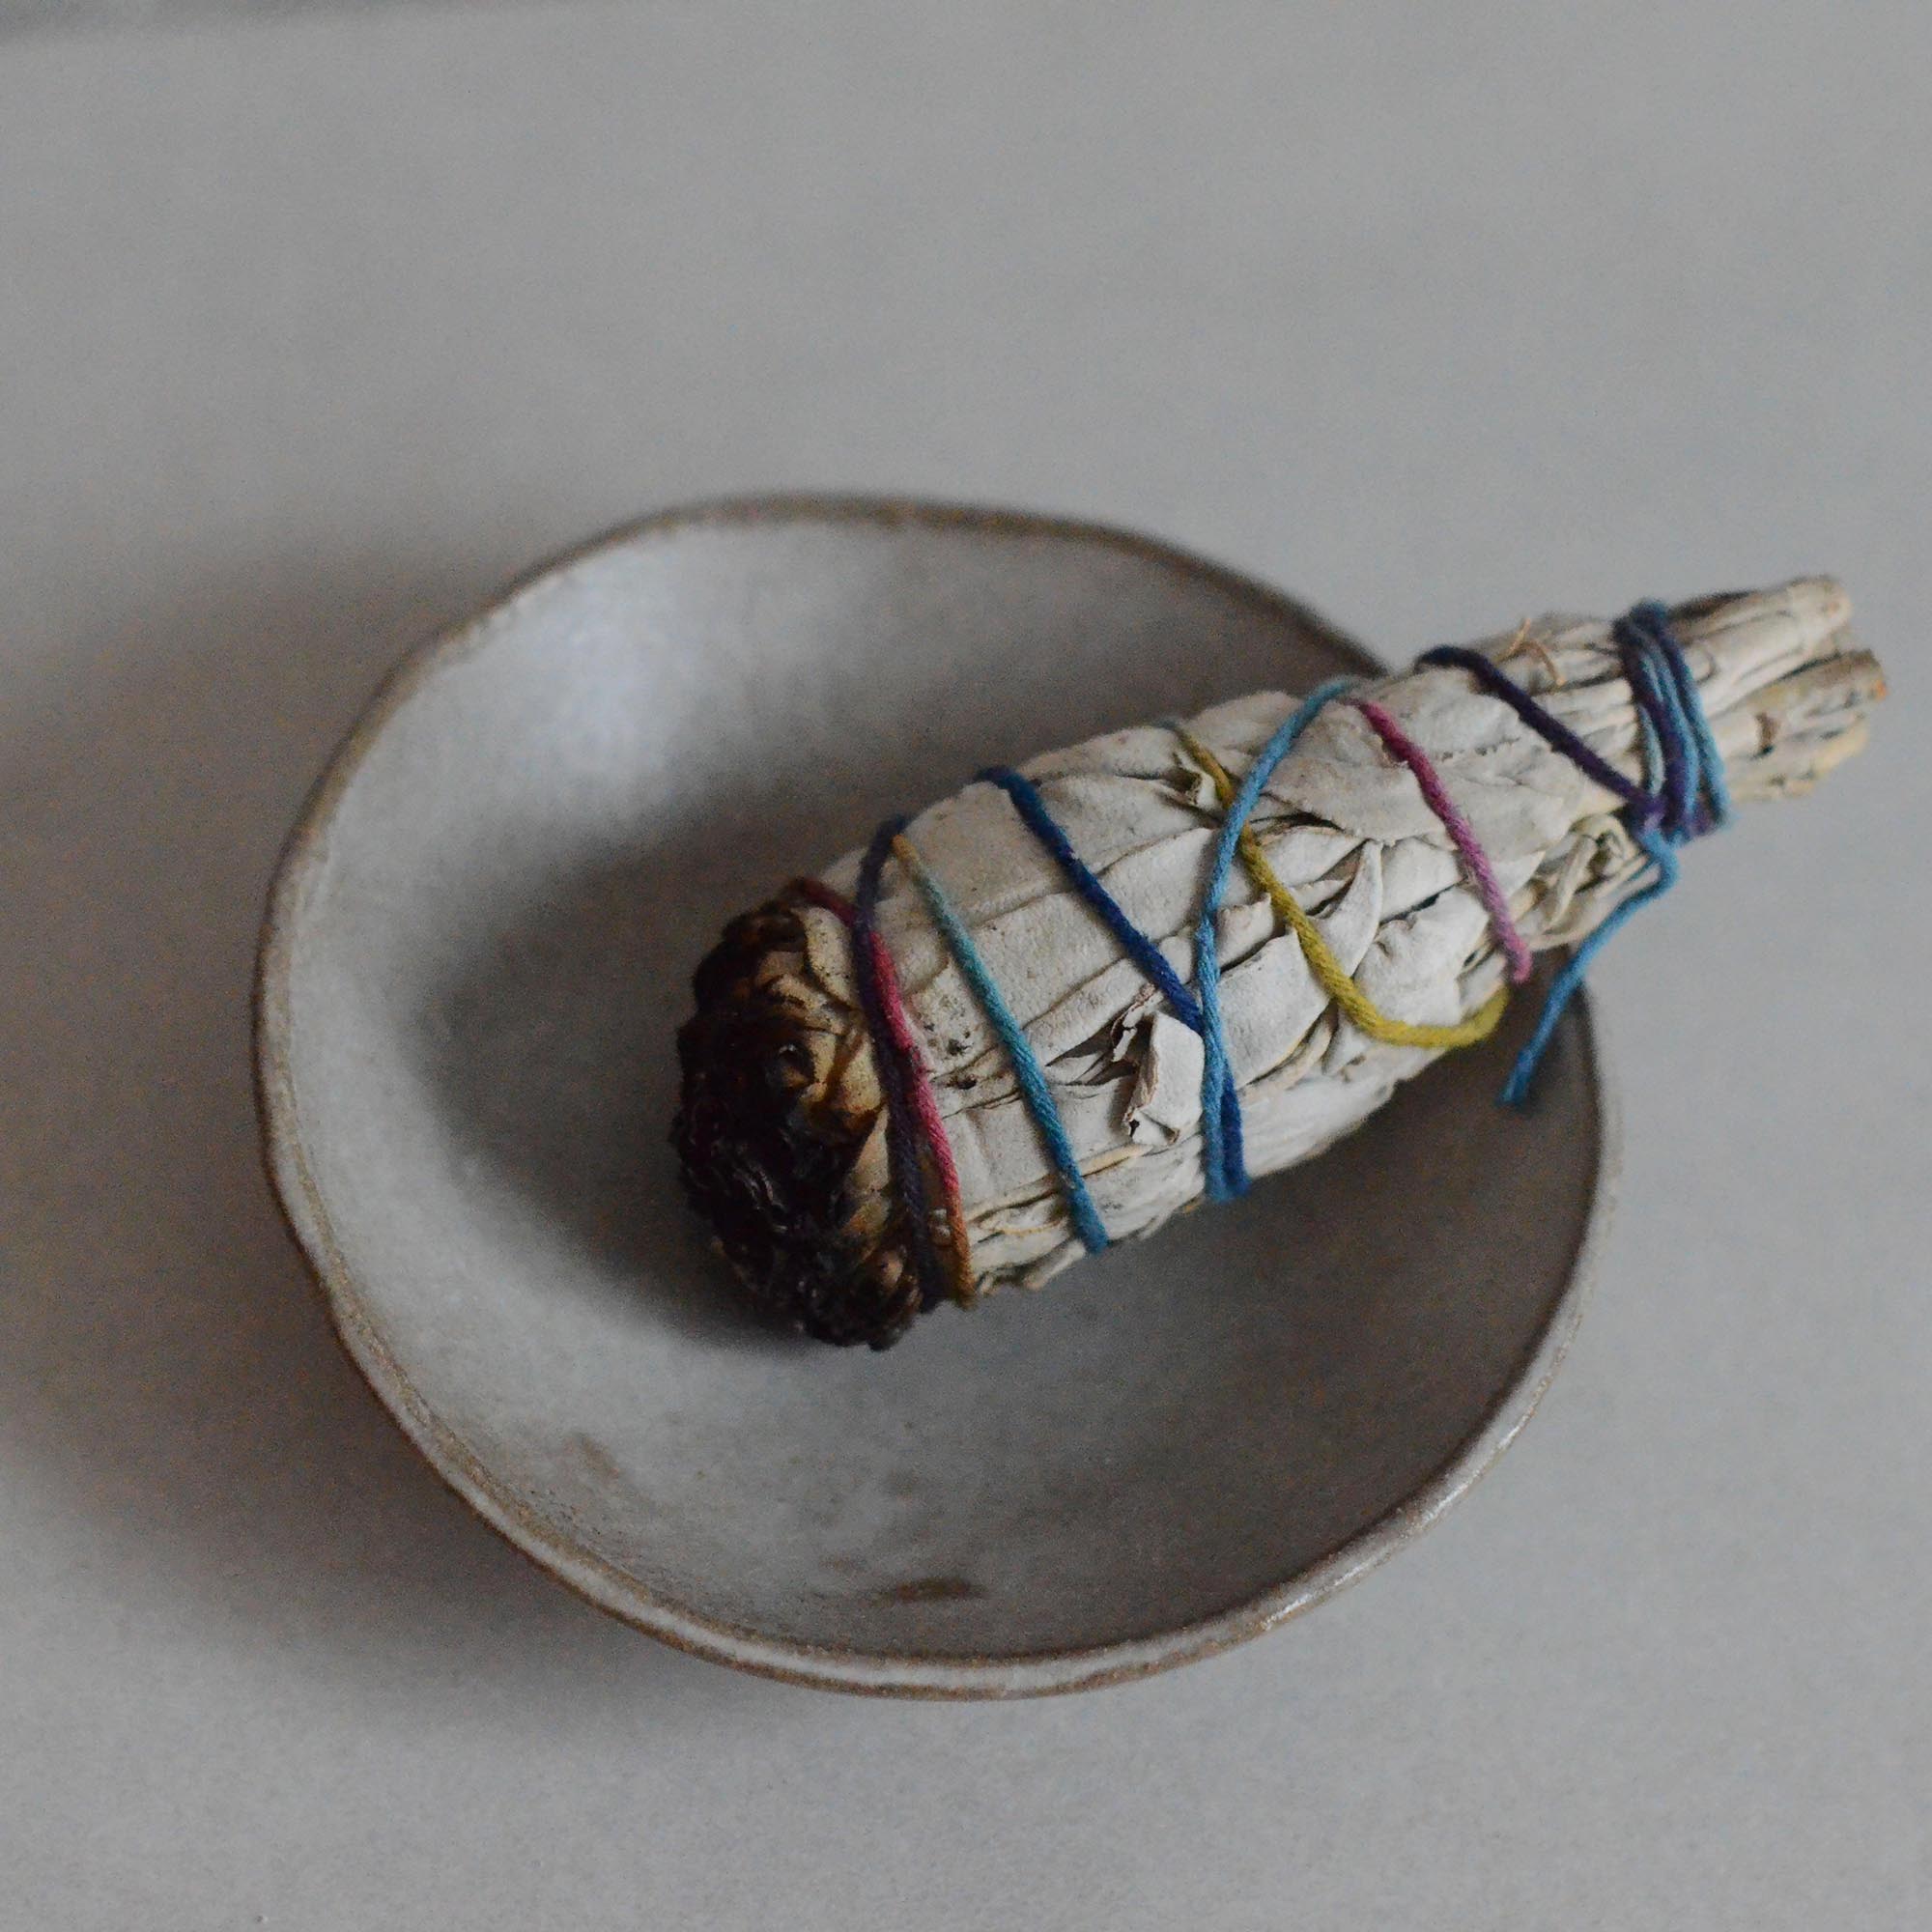 a smudge stick on the sand ceramic incense bowl